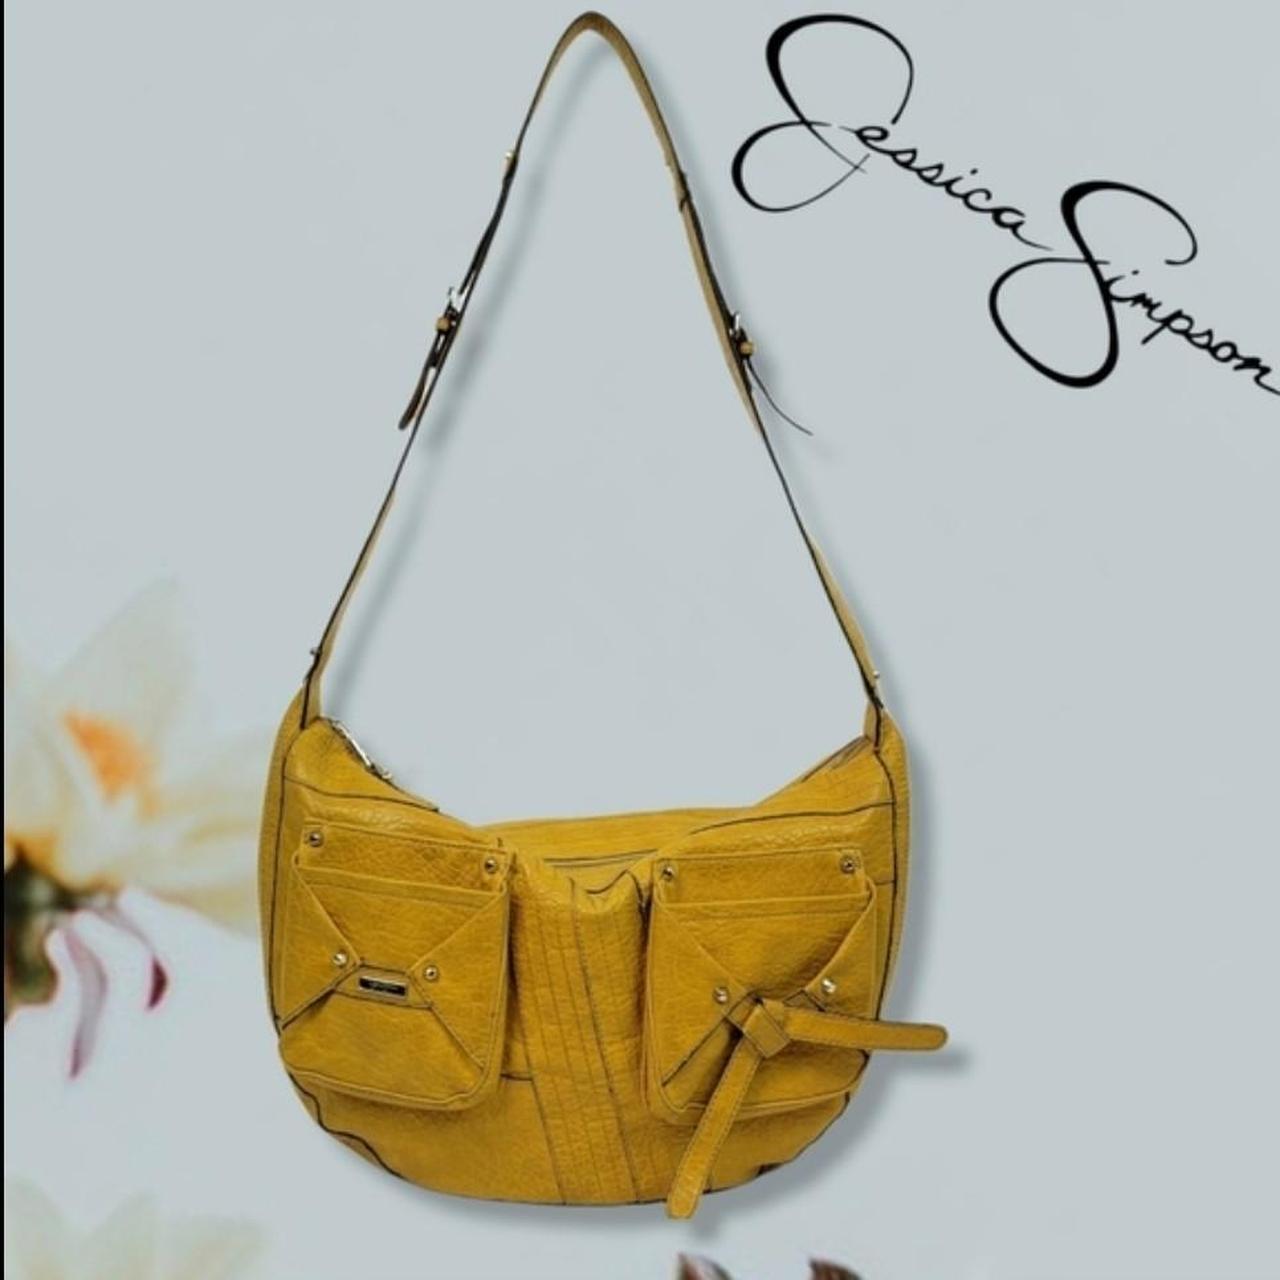 Jessica Simpson Hobo Handbag Purse Faux Leather Braided Handle - Golden  Yellow | eBay